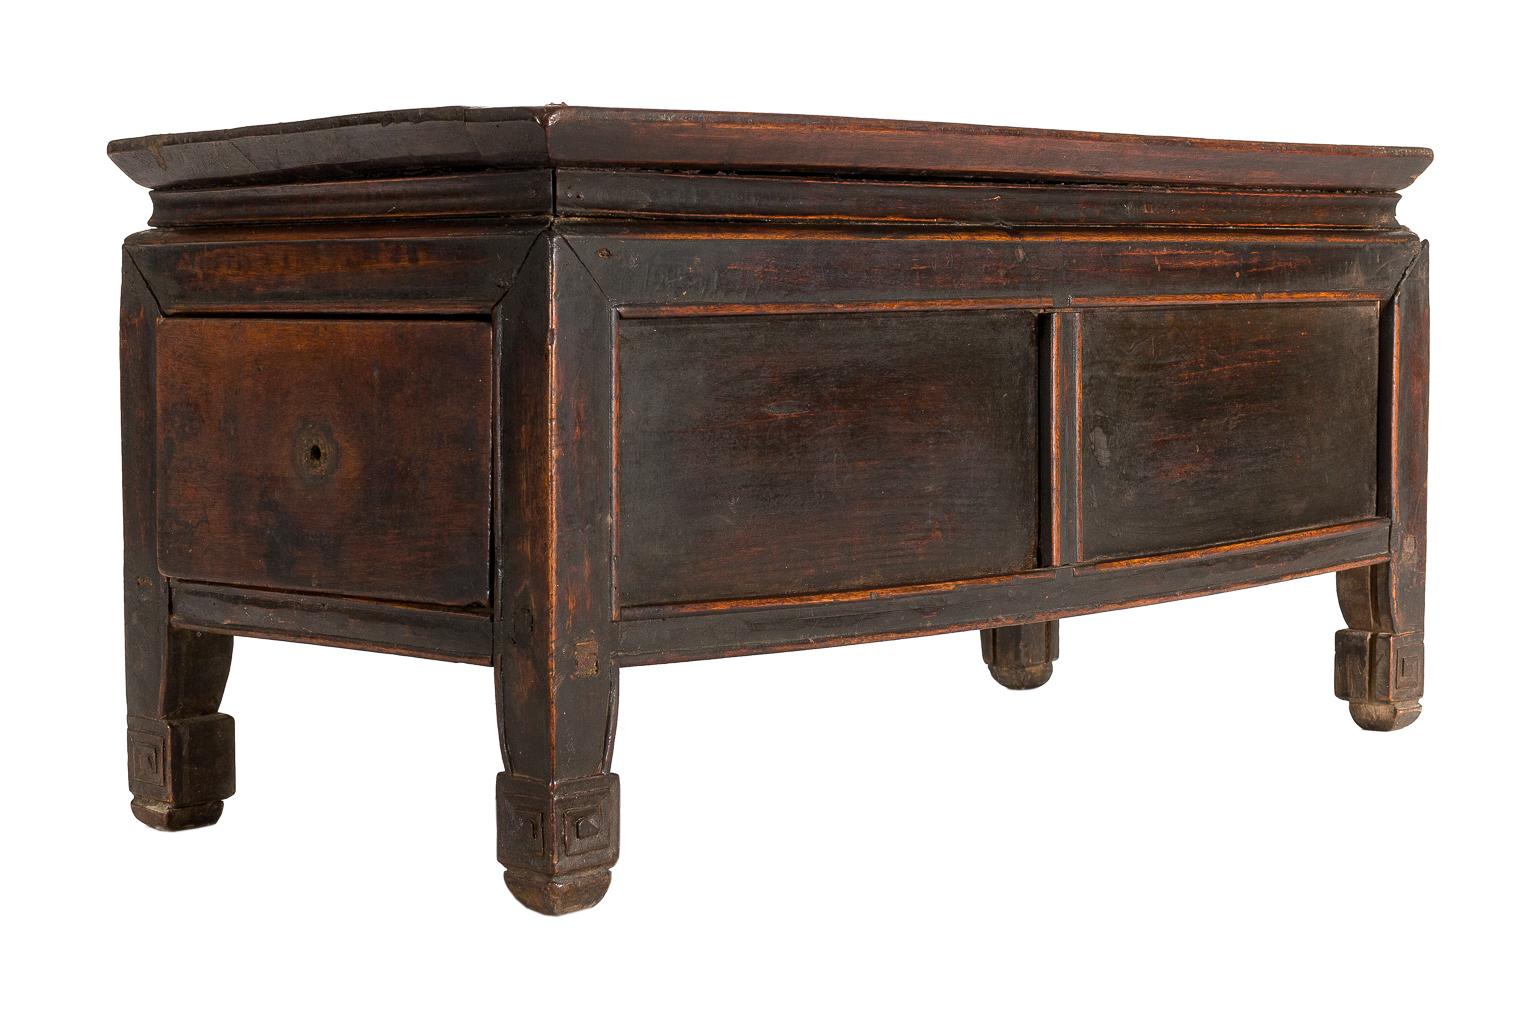 Wood Antique Tibetan Tea Table or Storage Box